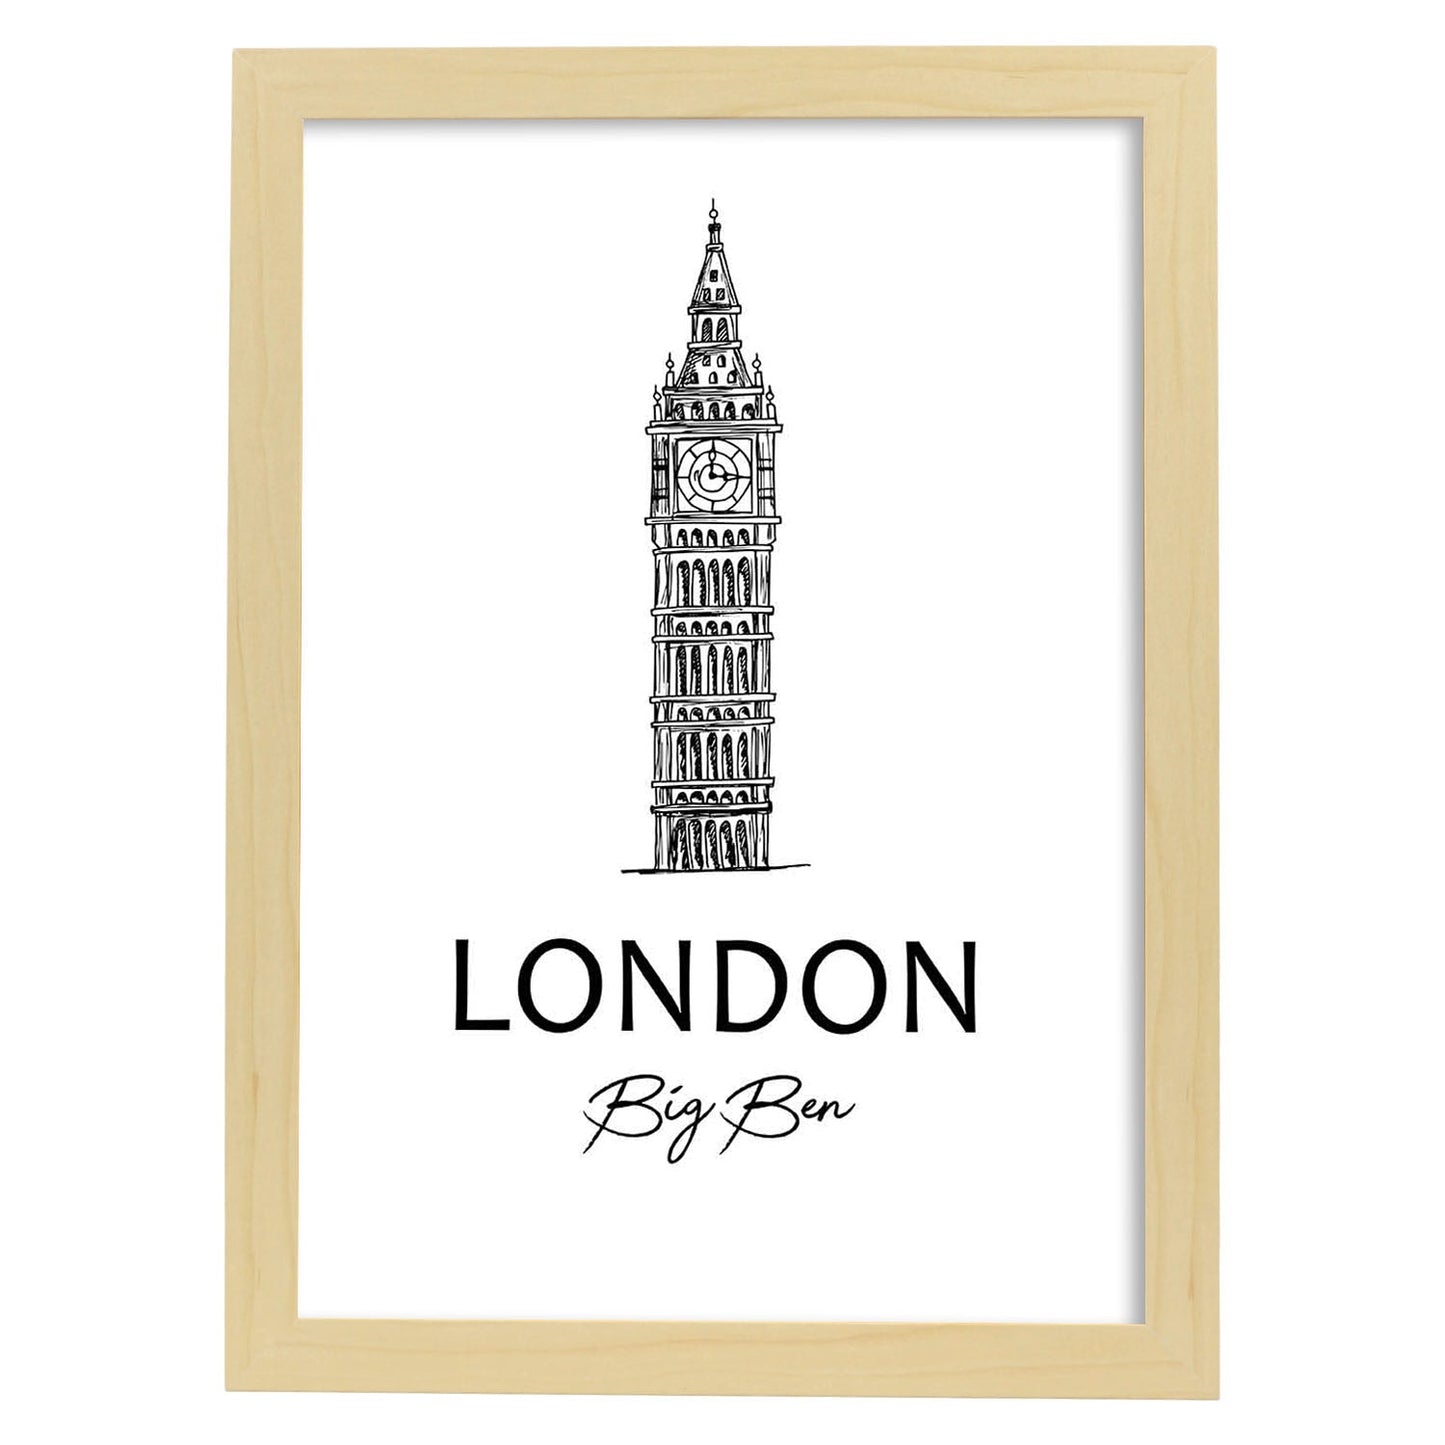 Poster de Londres - Big Ben. Láminas con monumentos de ciudades.-Artwork-Nacnic-A4-Marco Madera clara-Nacnic Estudio SL